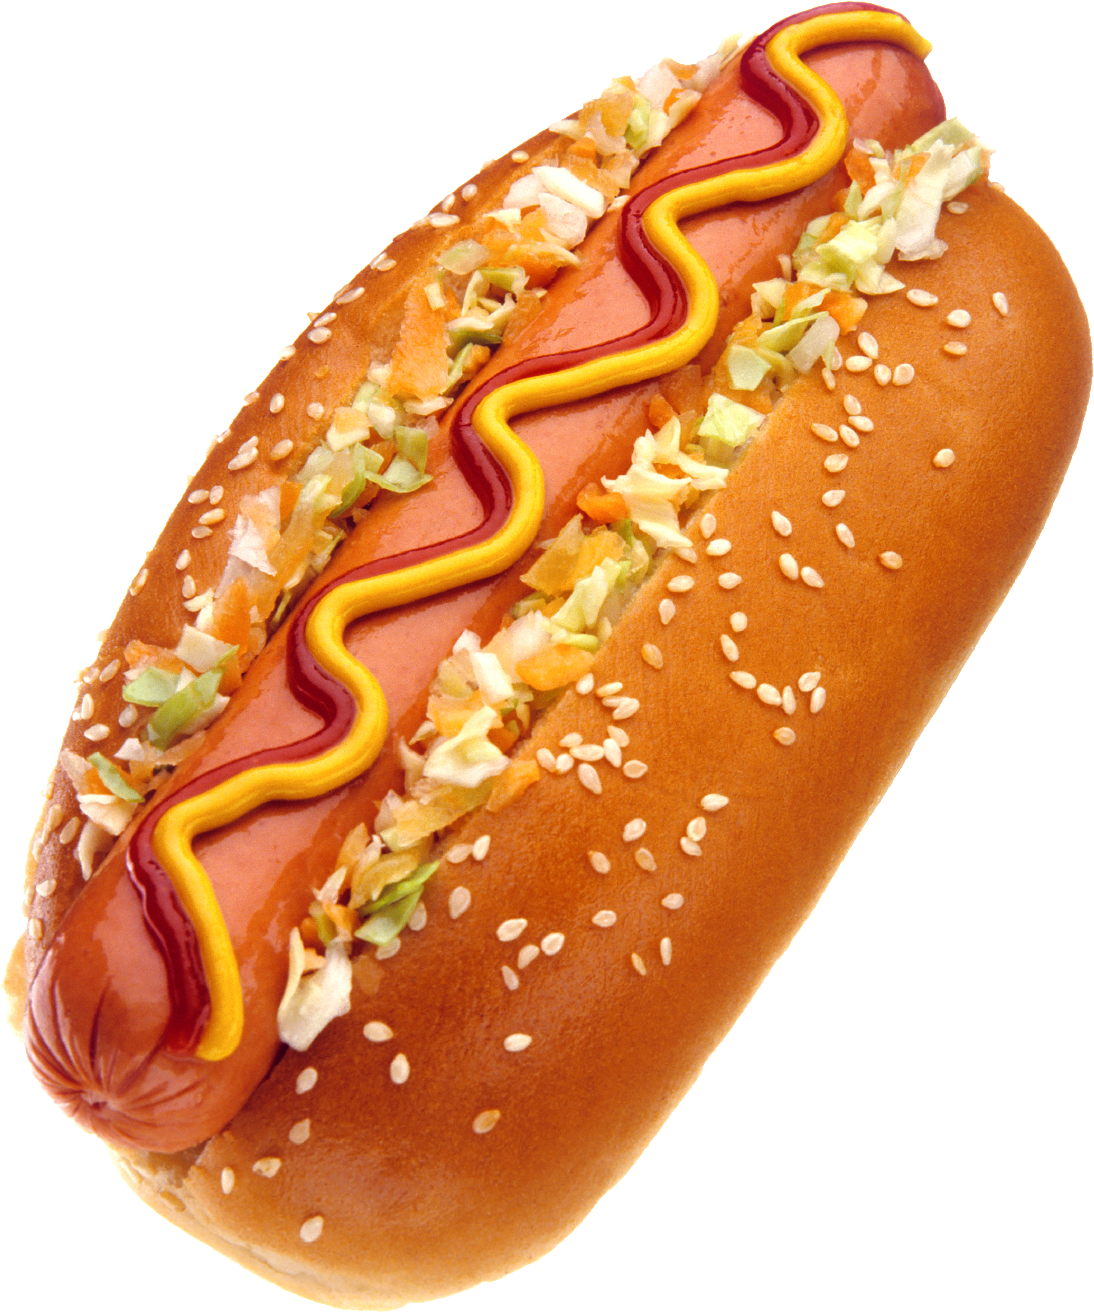 Hot Dog Png Image - Hotdog, Transparent background PNG HD thumbnail